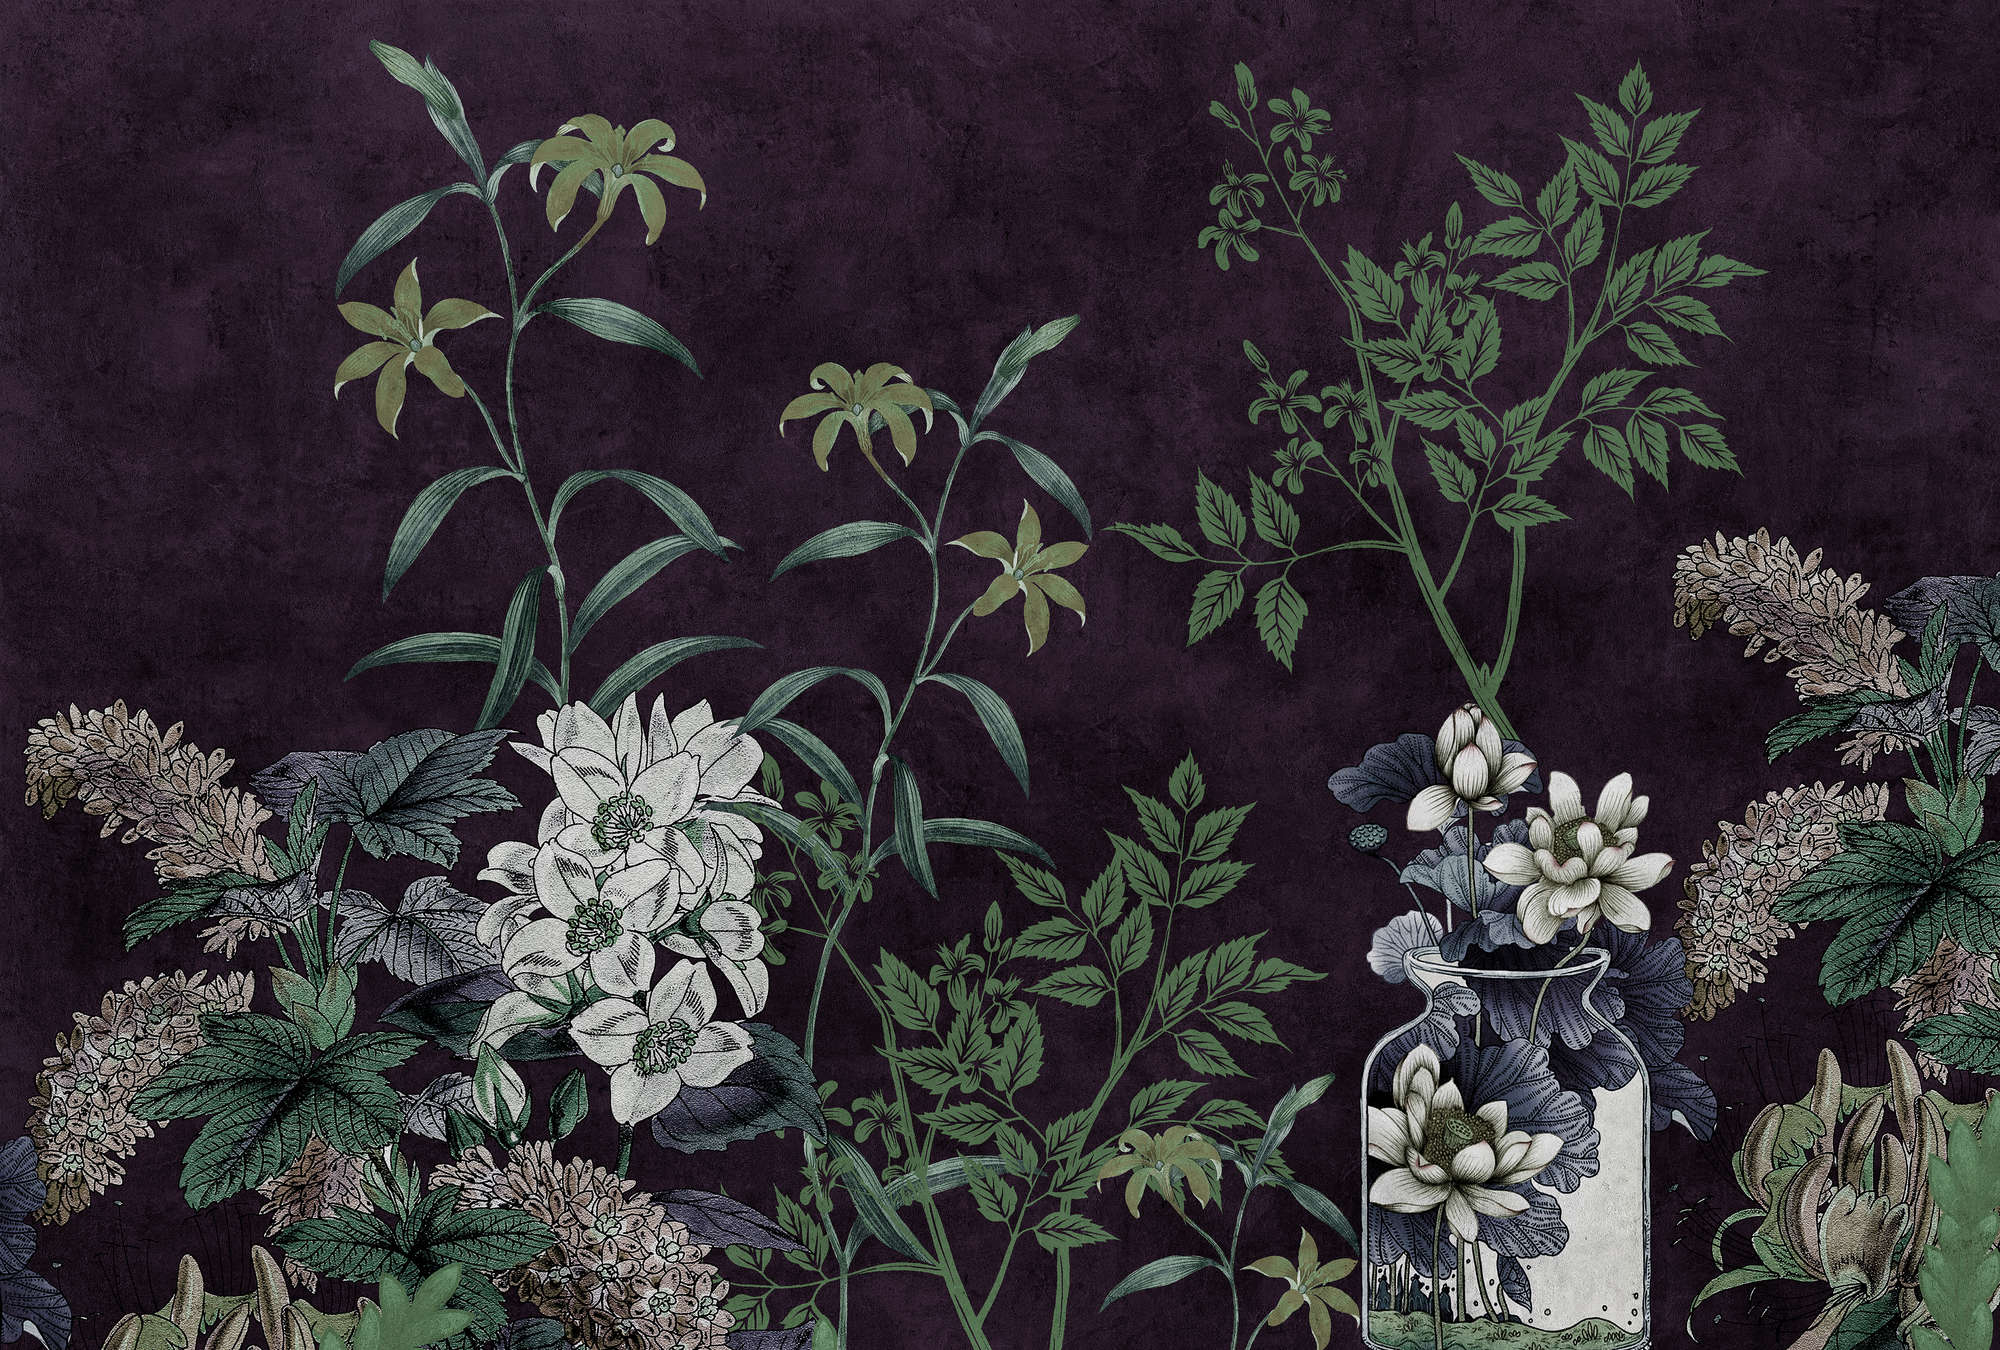             Dark Room 1 - Black Wallpaper Botanical Pattern Green
        